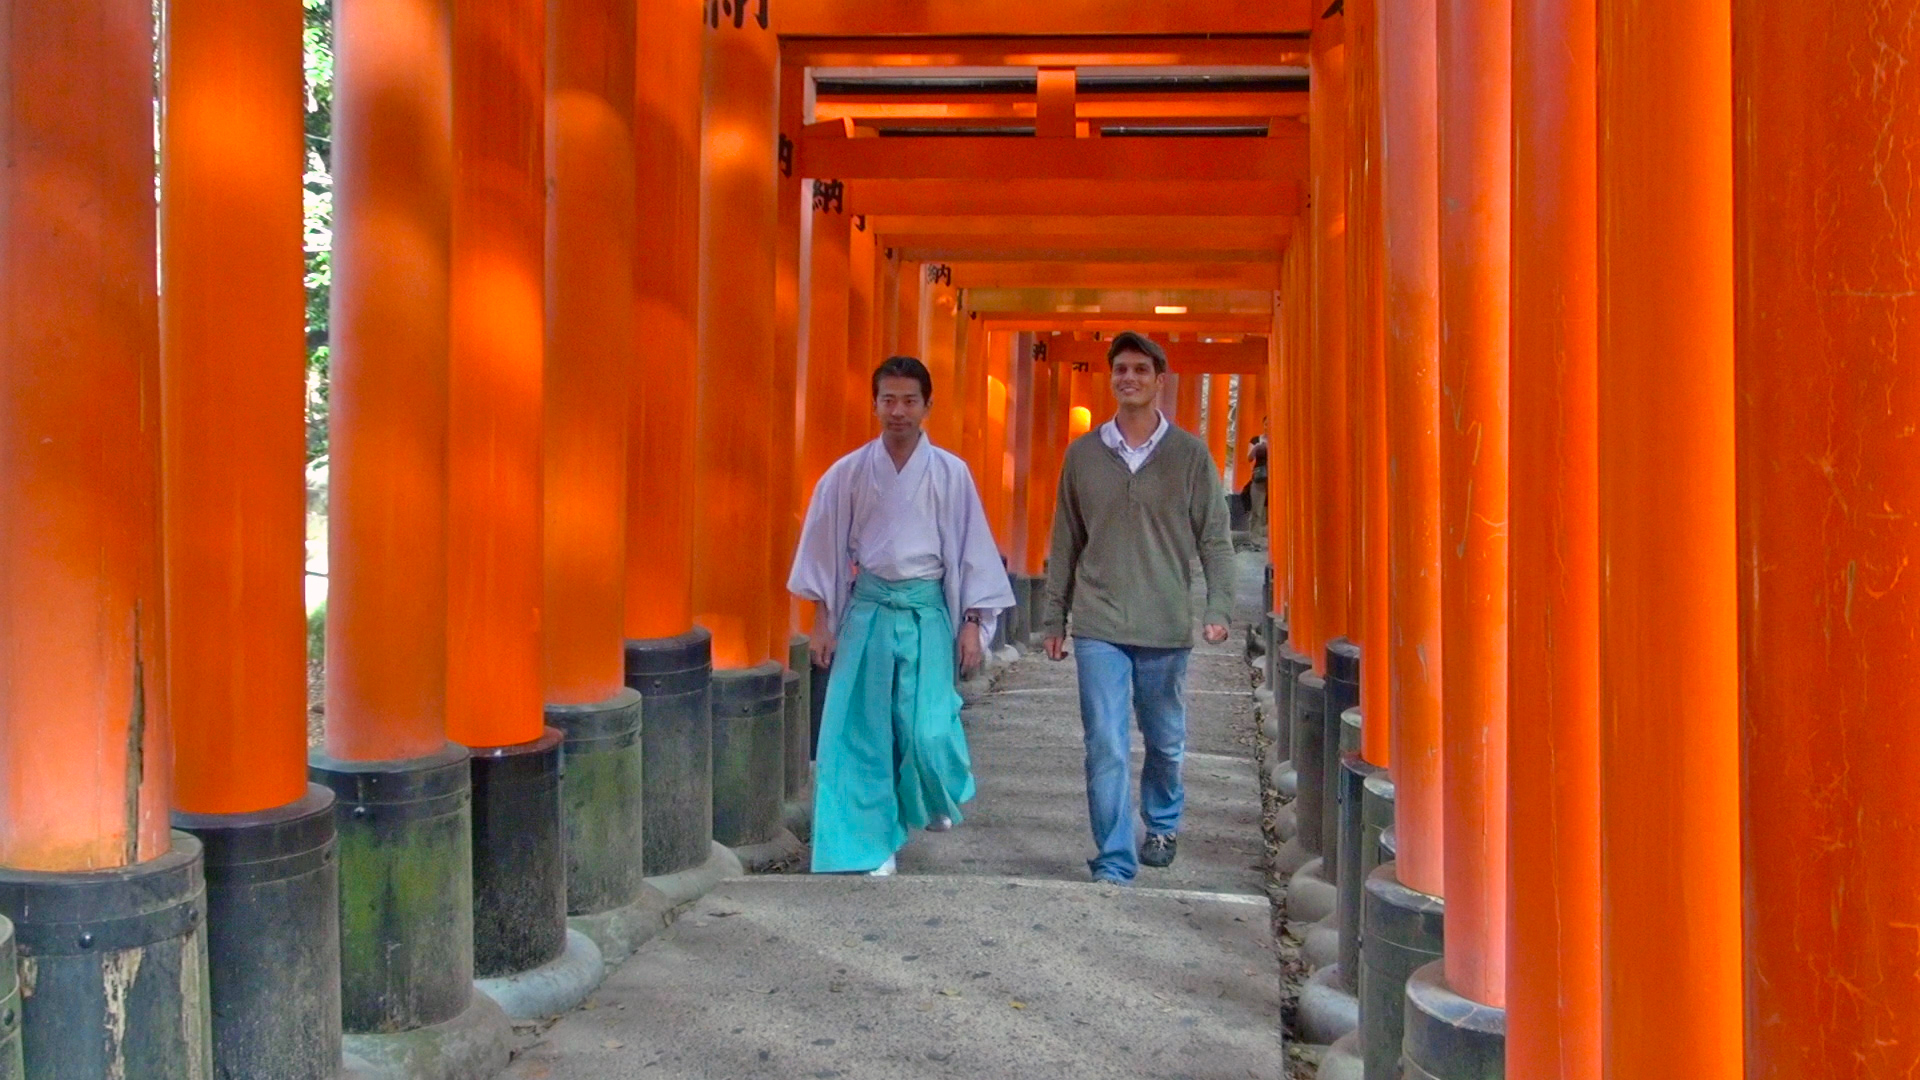 Fushimi Inari Shrine: What Makes it Japan's No. 1 Attraction